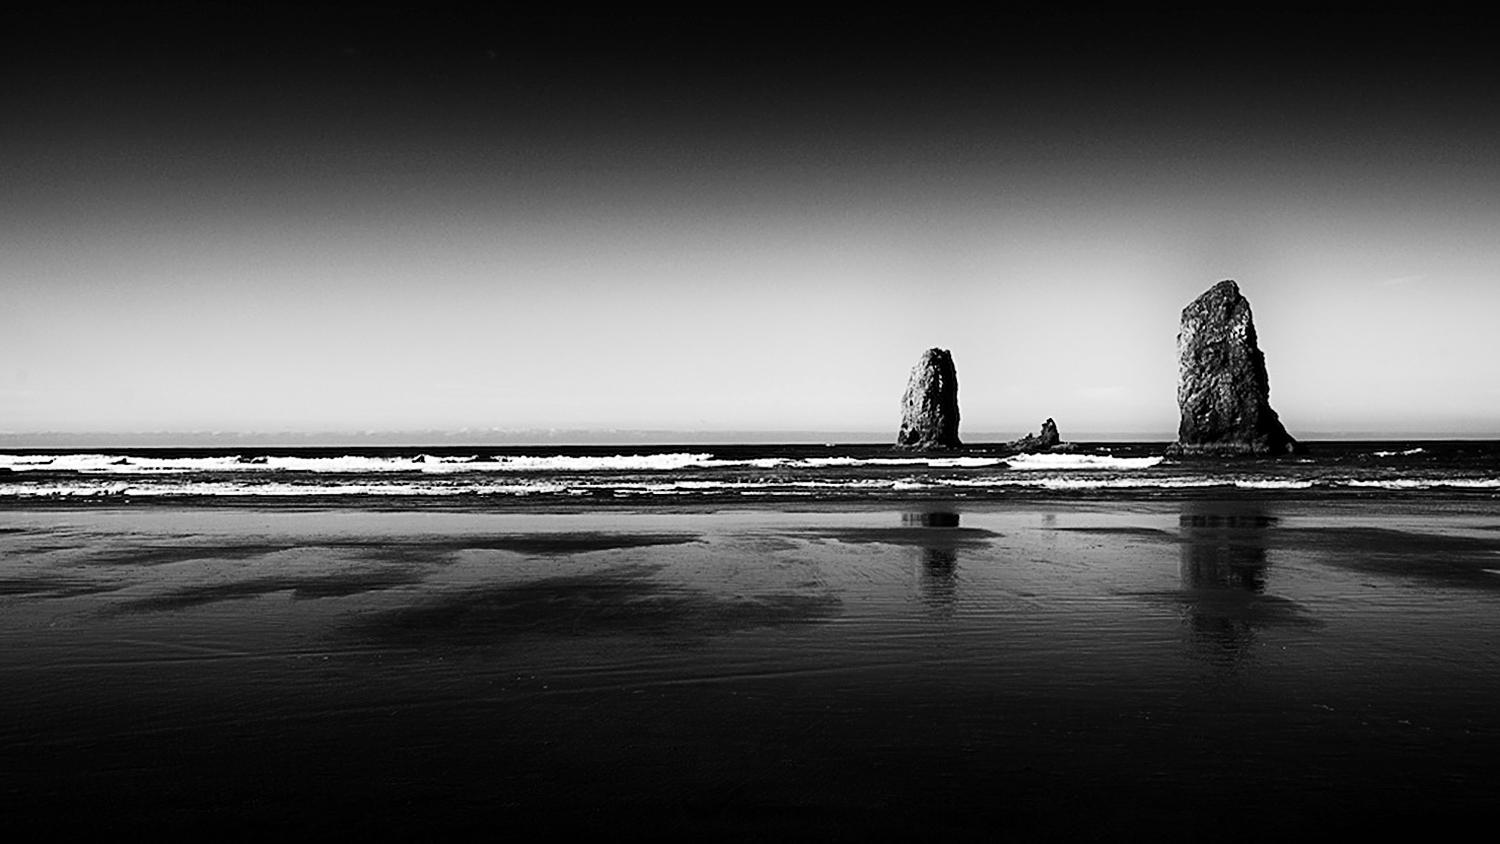 Michael Götze Landscape Photograph – Oregon Beach - zeitgenössische Schwarz-Weiß-Fotografie Meereslandschaft, Steg